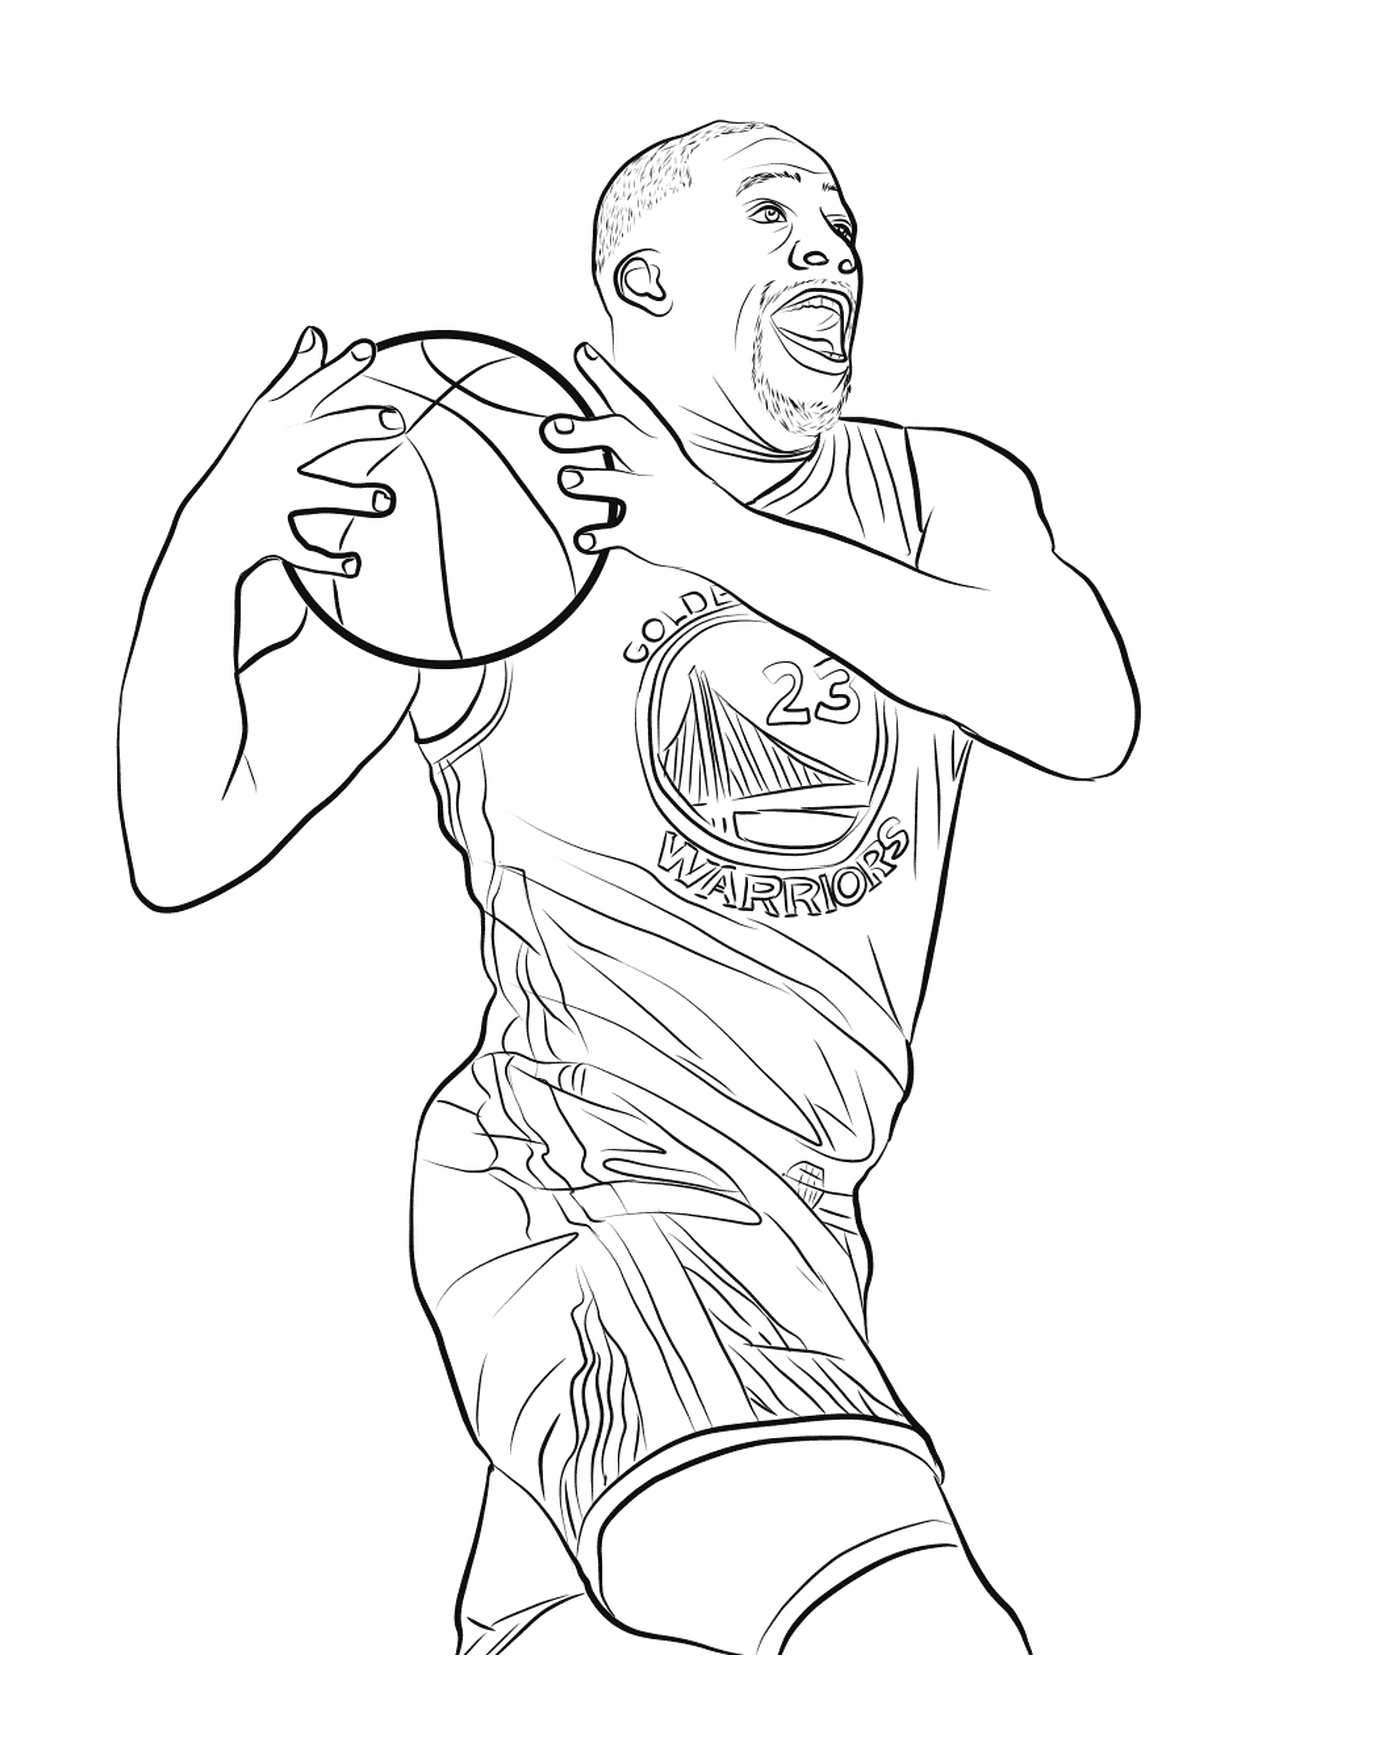  Draymond Green sostiene una pelota de baloncesto 